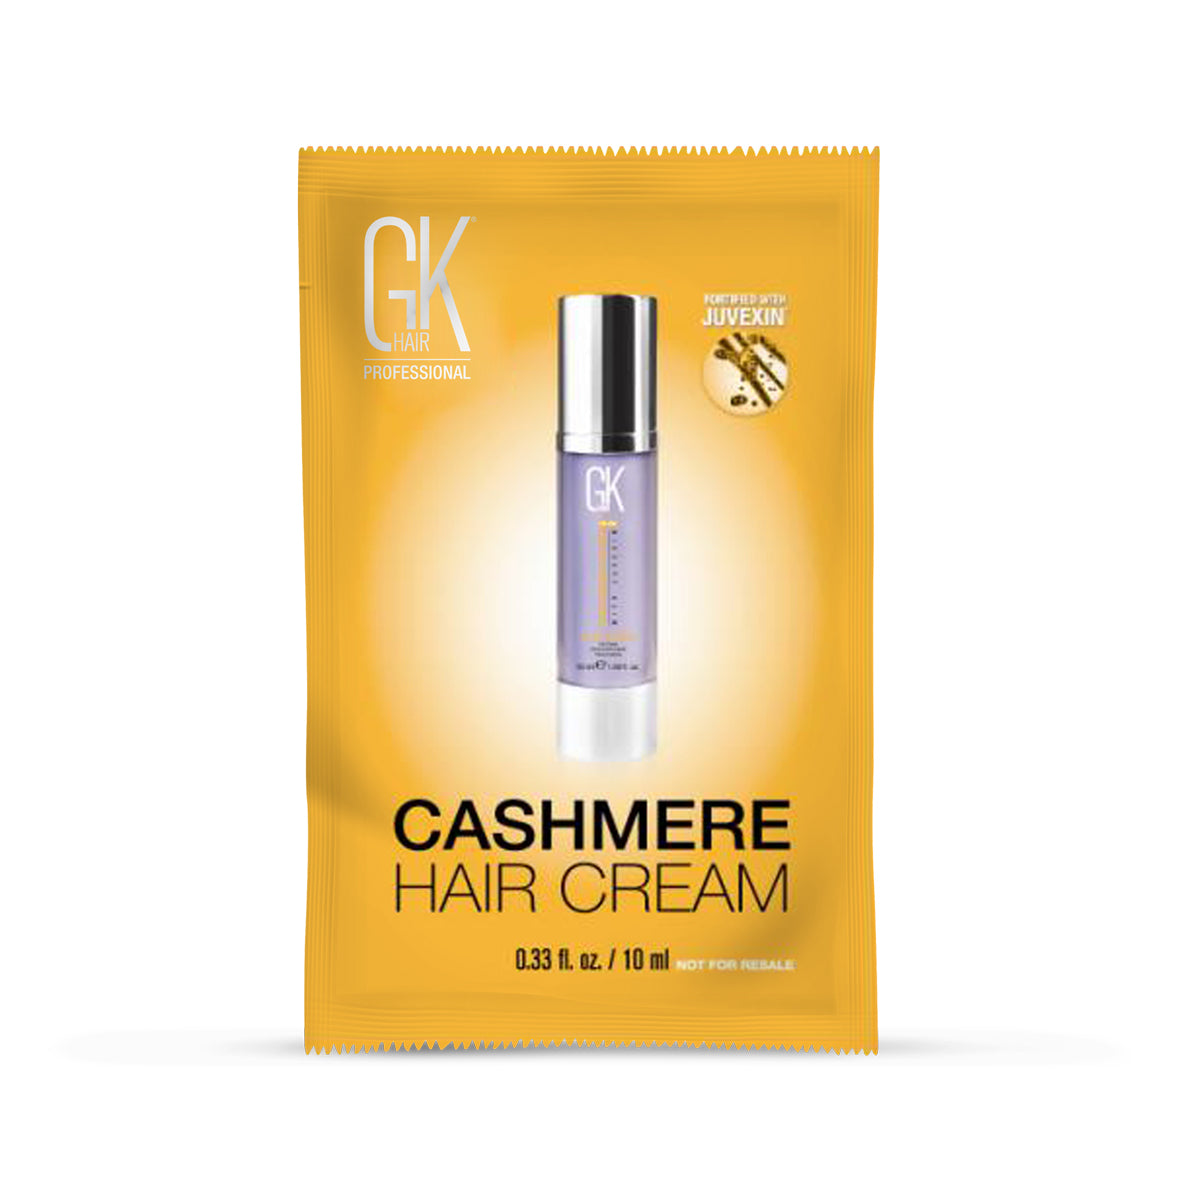 Cashmere Hair Cream